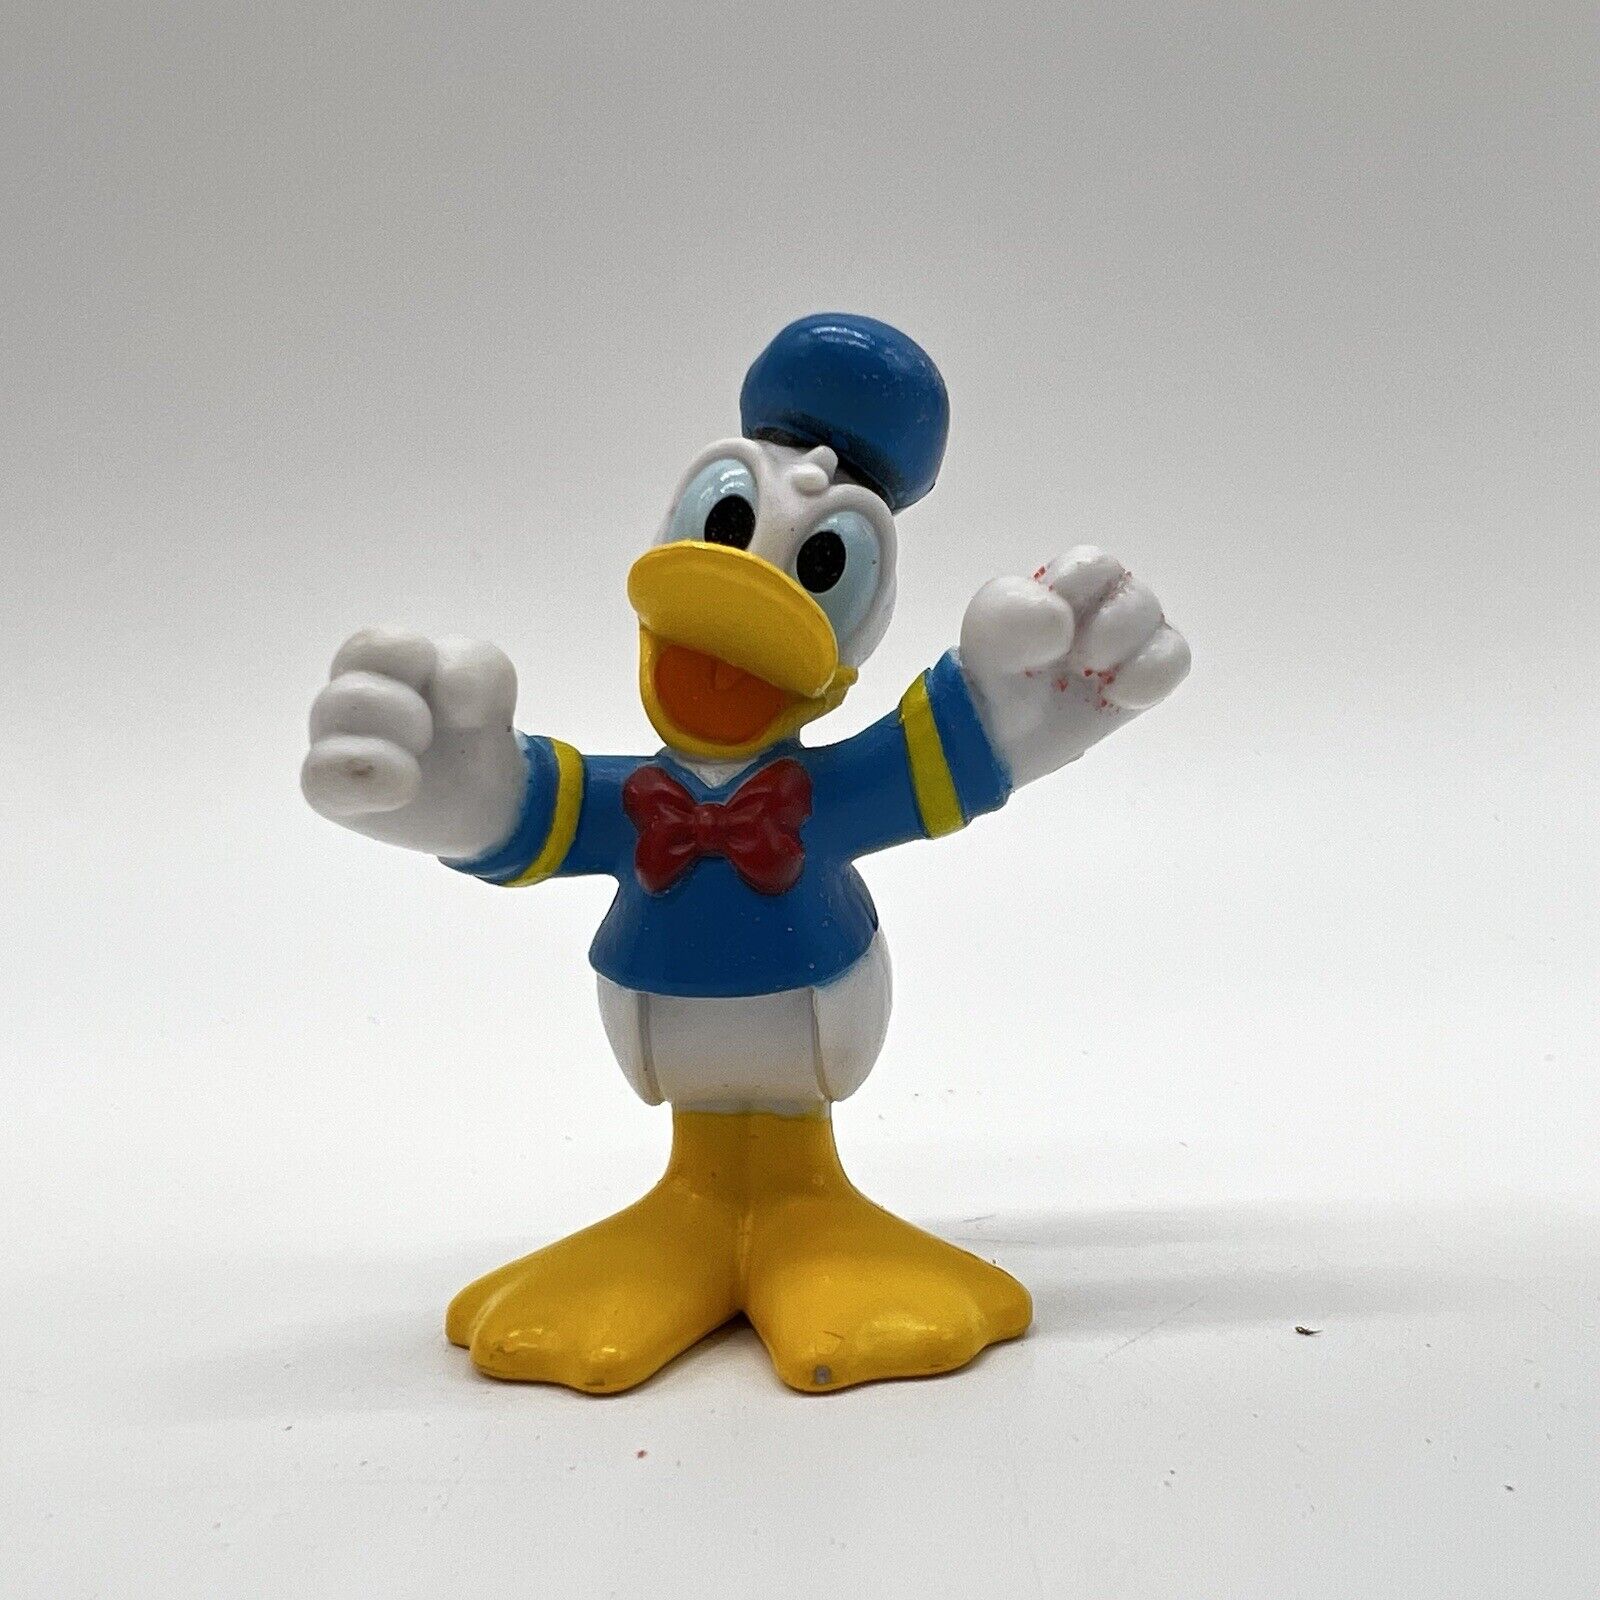 Disney Mattel Donald Duck Moves Plastic Toy 2013